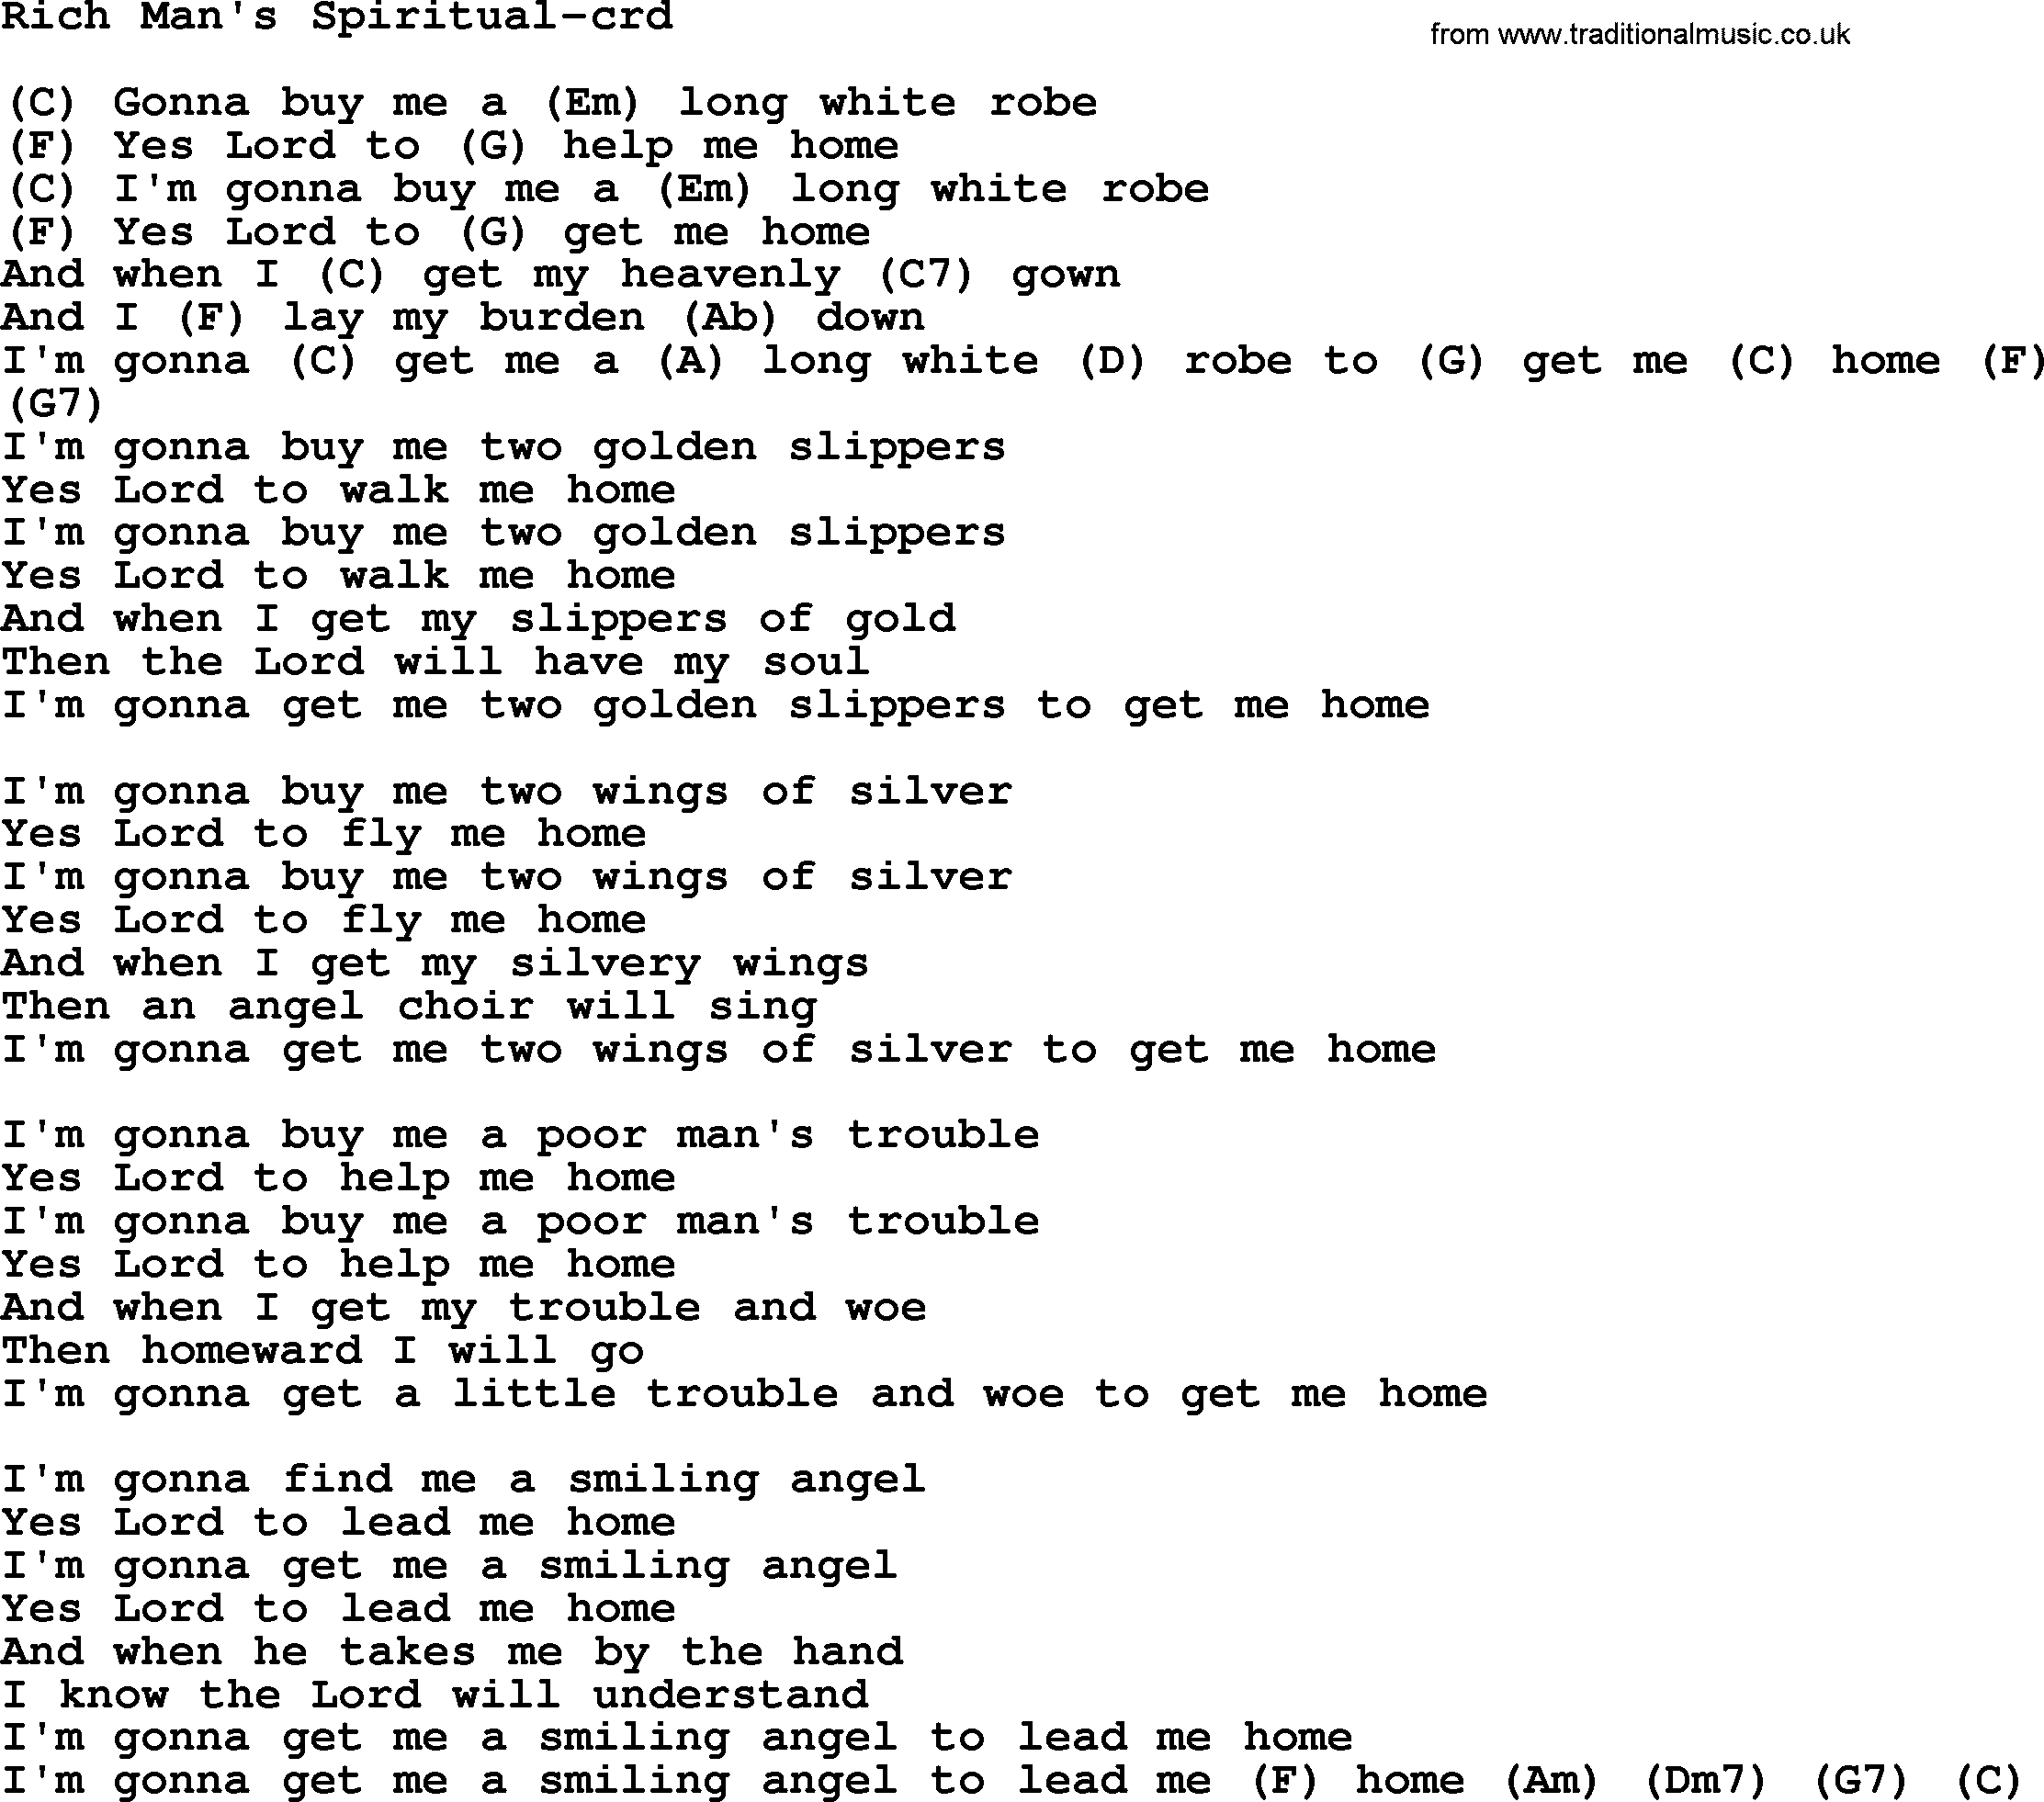 Gordon Lightfoot song Rich Man's Spiritual, lyrics and chords